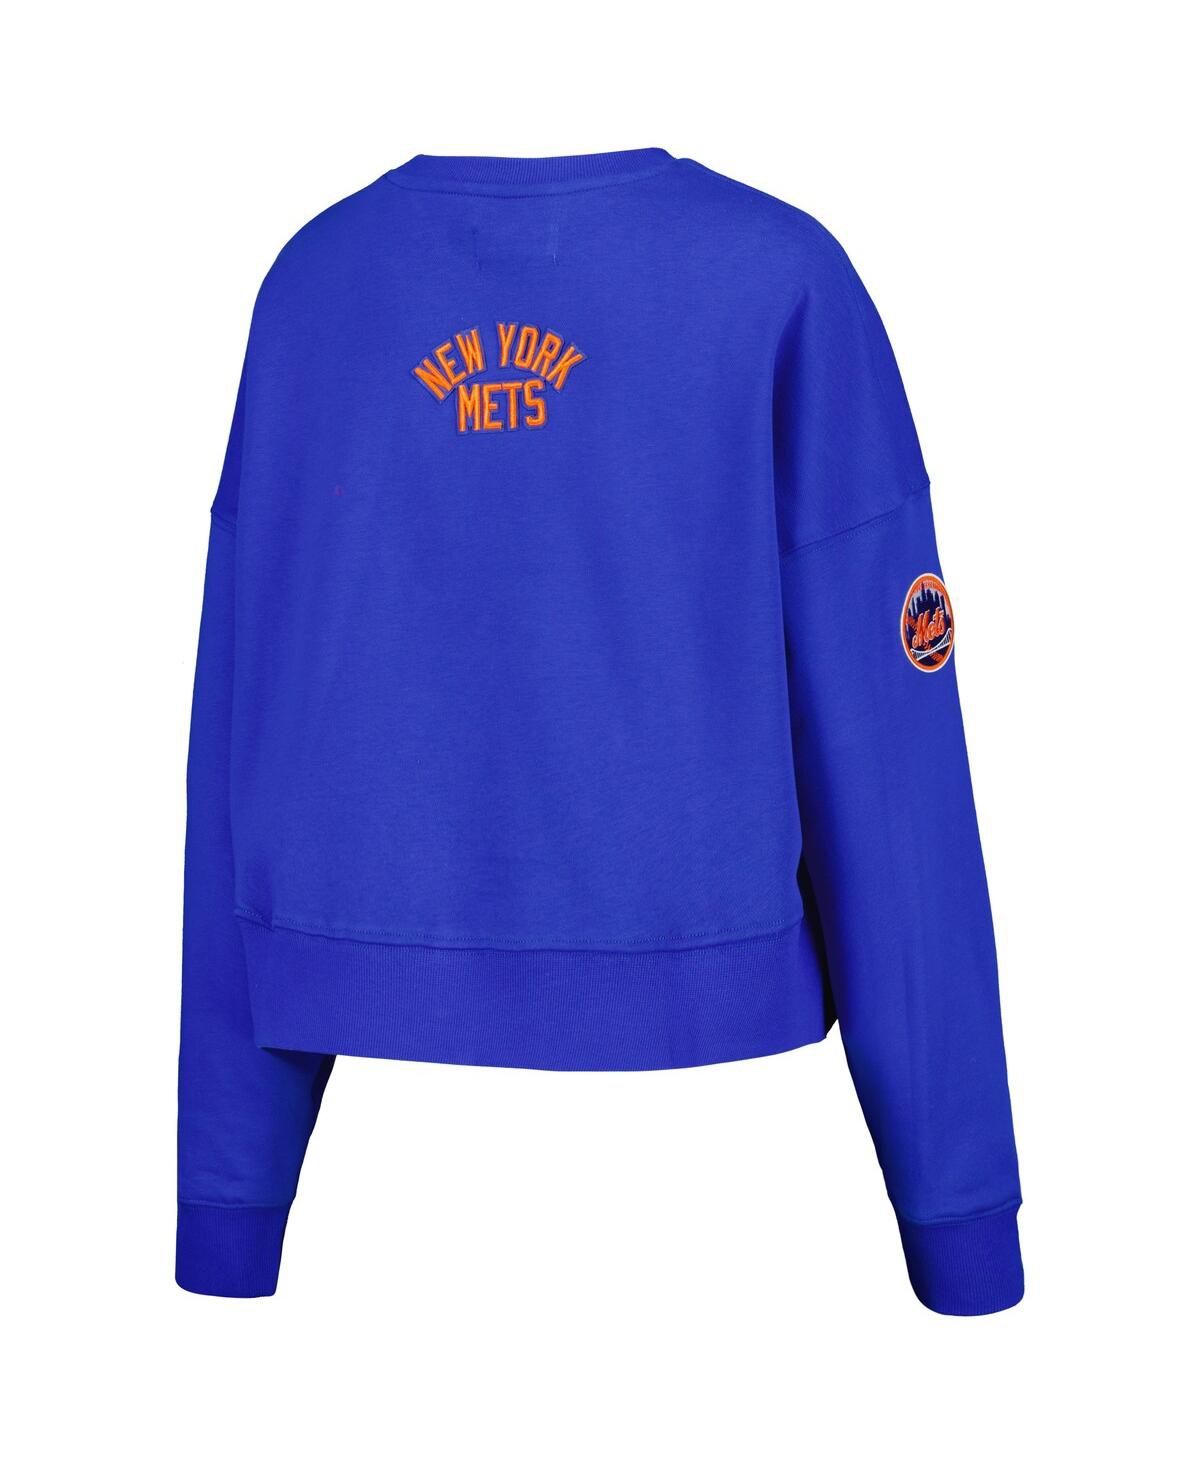 Shop Pro Standard Women's  Royal New York Mets Painted Sky Pullover Sweatshirt